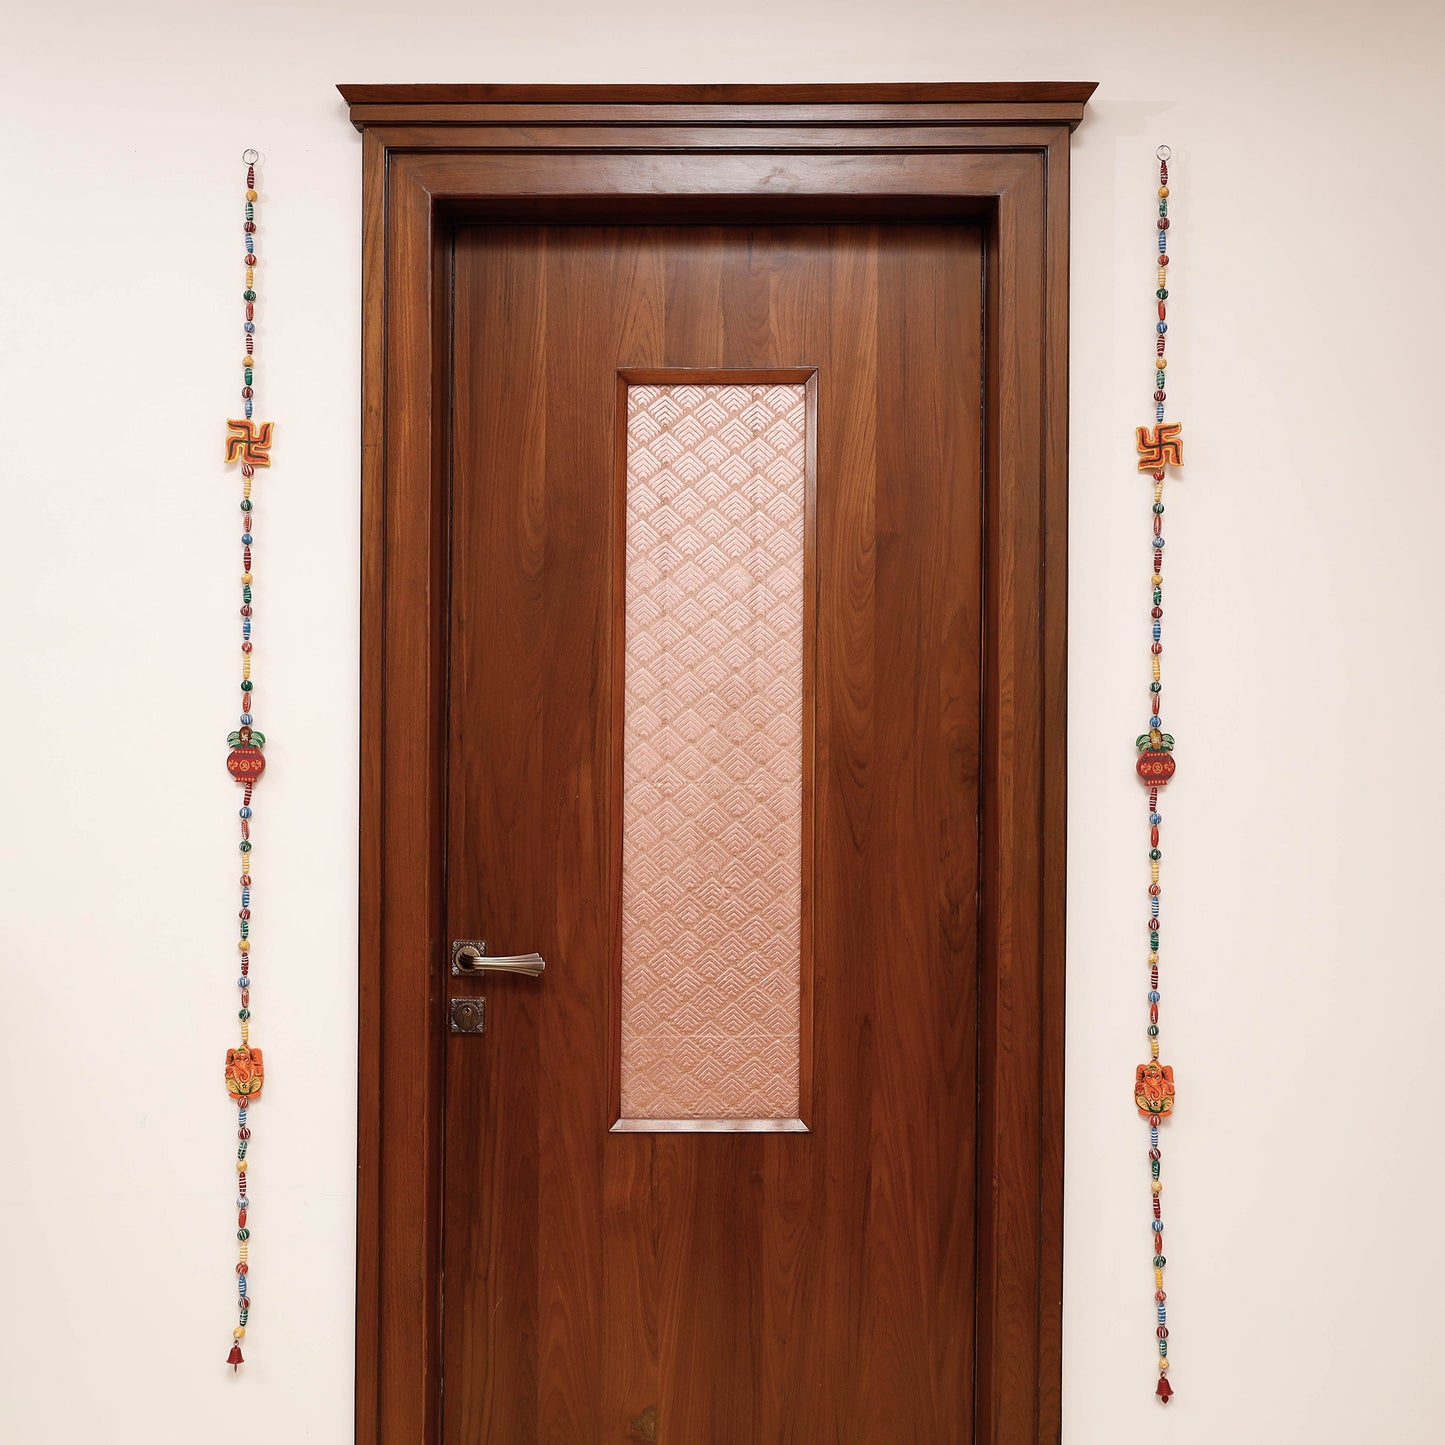  Terracotta Beads Decorative Hanging